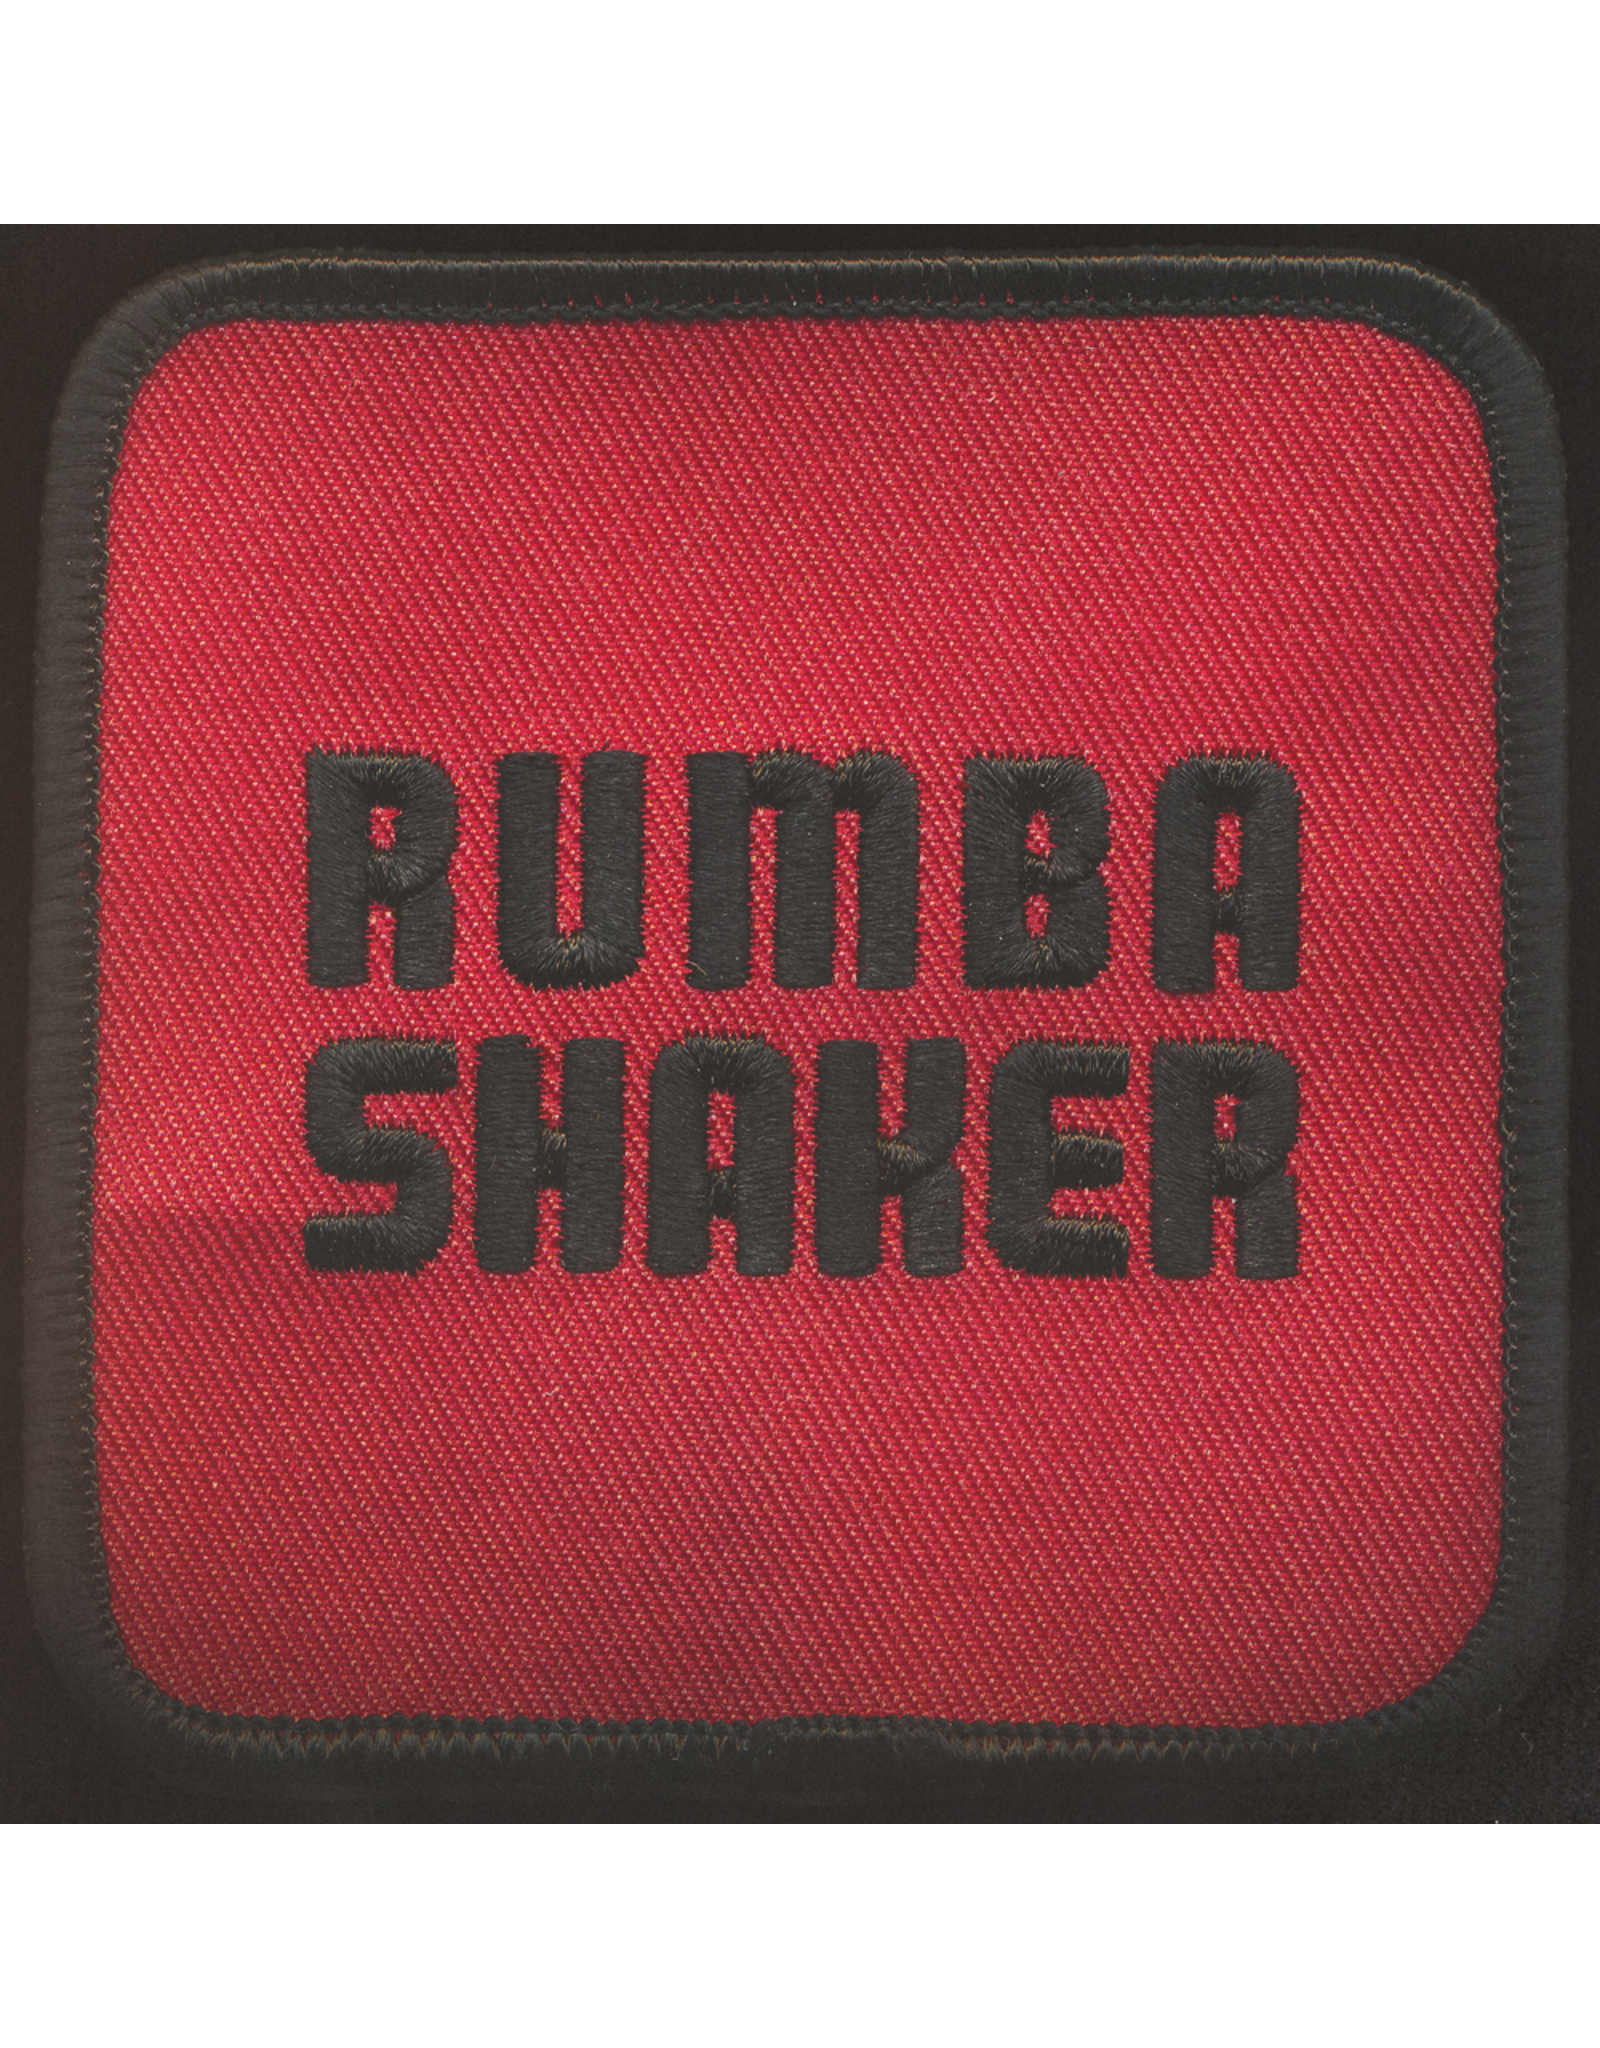 Rumba Shaker - s/t LP